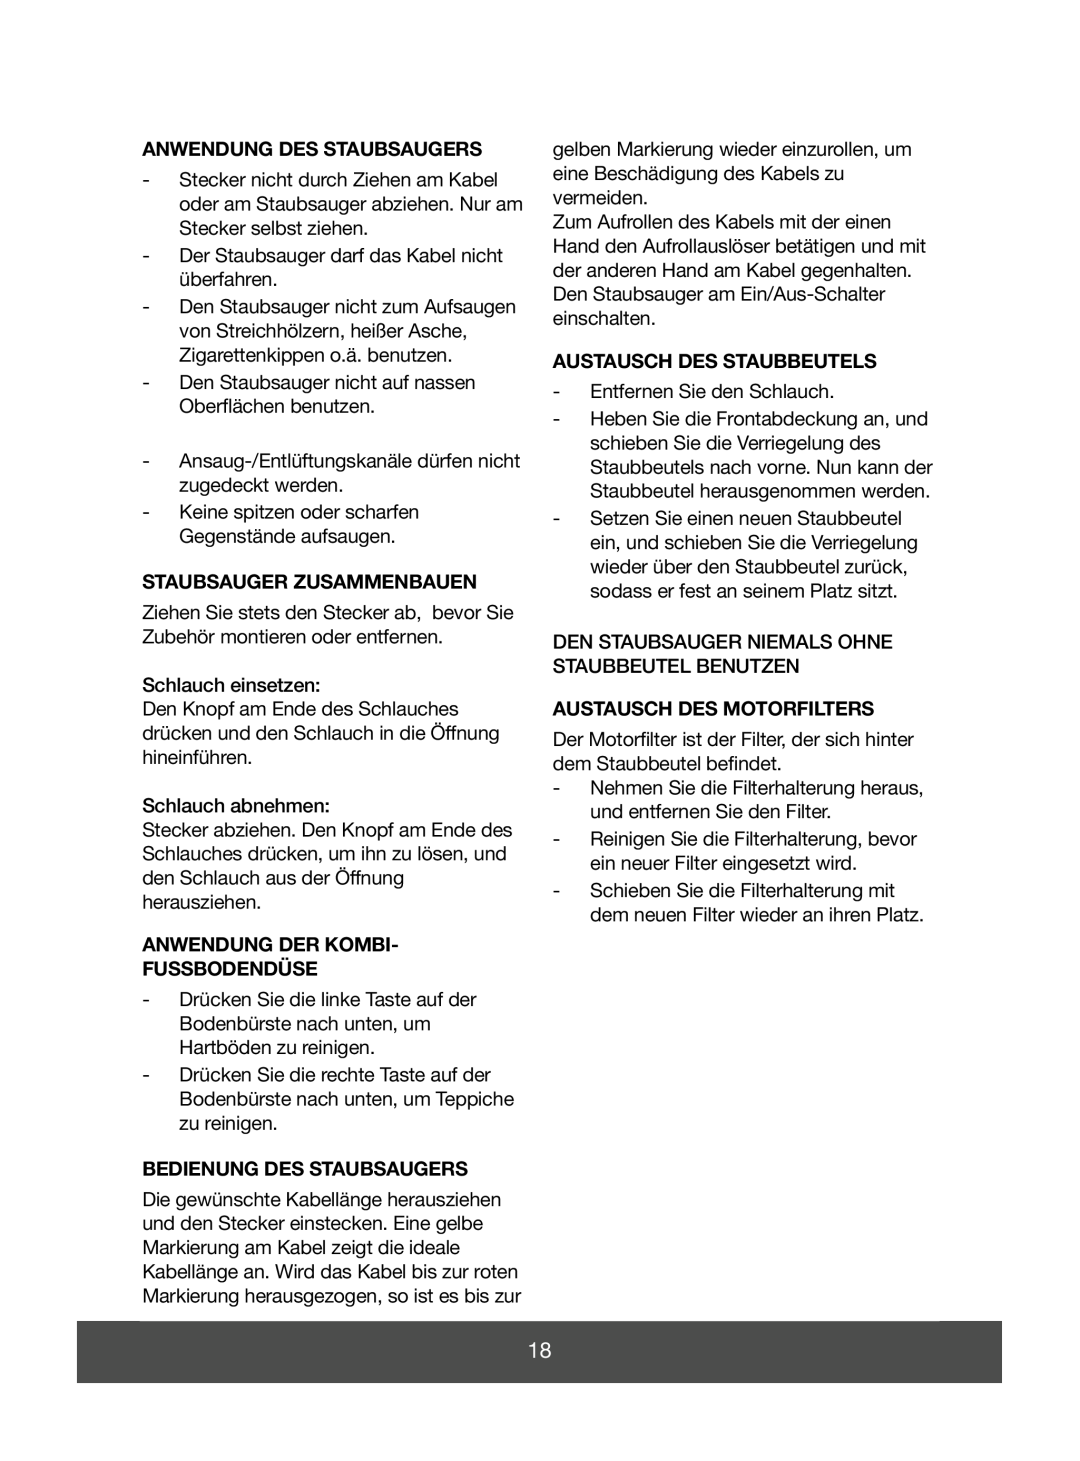 Melissa 640-040/051 manual Anwendung Des Staubsaugers, Staubsauger Zusammenbauen, Anwendung Der Kombi Fussbodendüse 